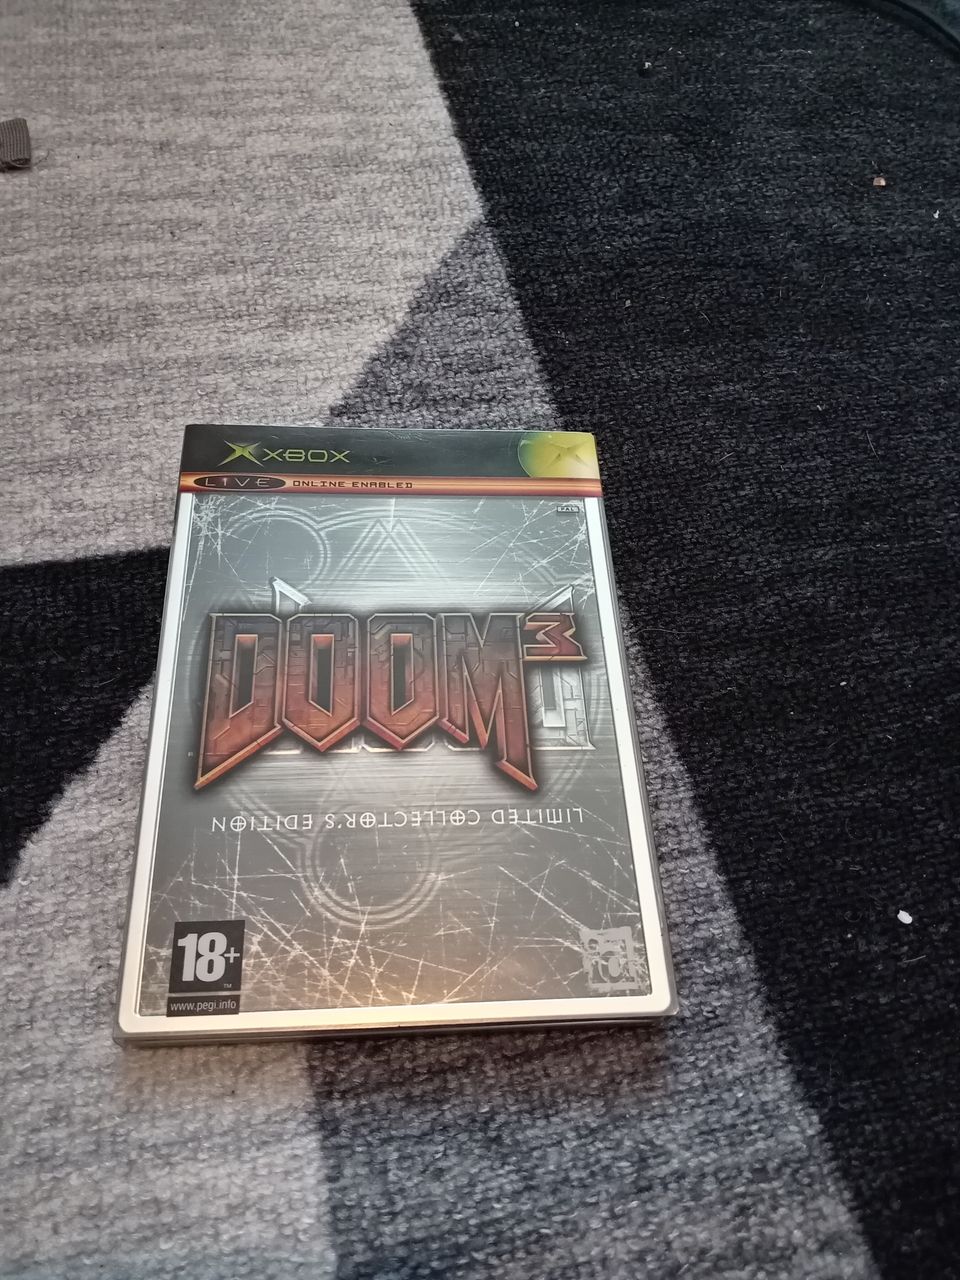 Doom 3 collection edition